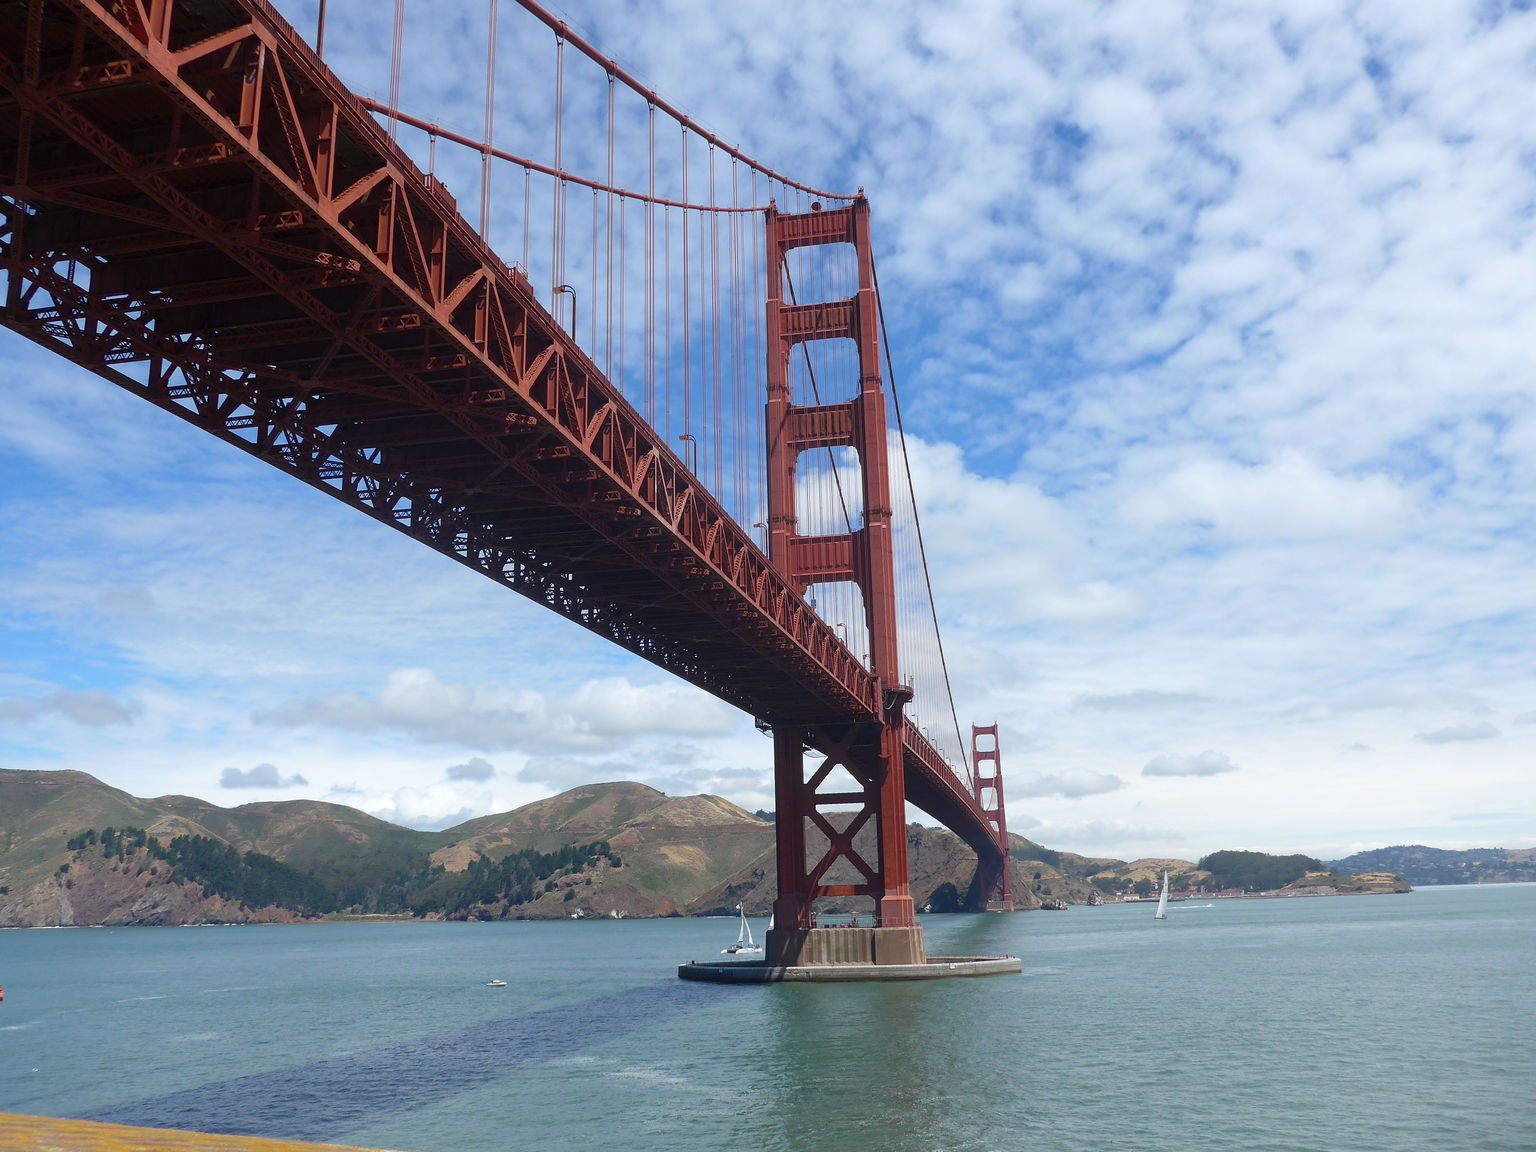 Amazing view of the Golden Gate Bridge